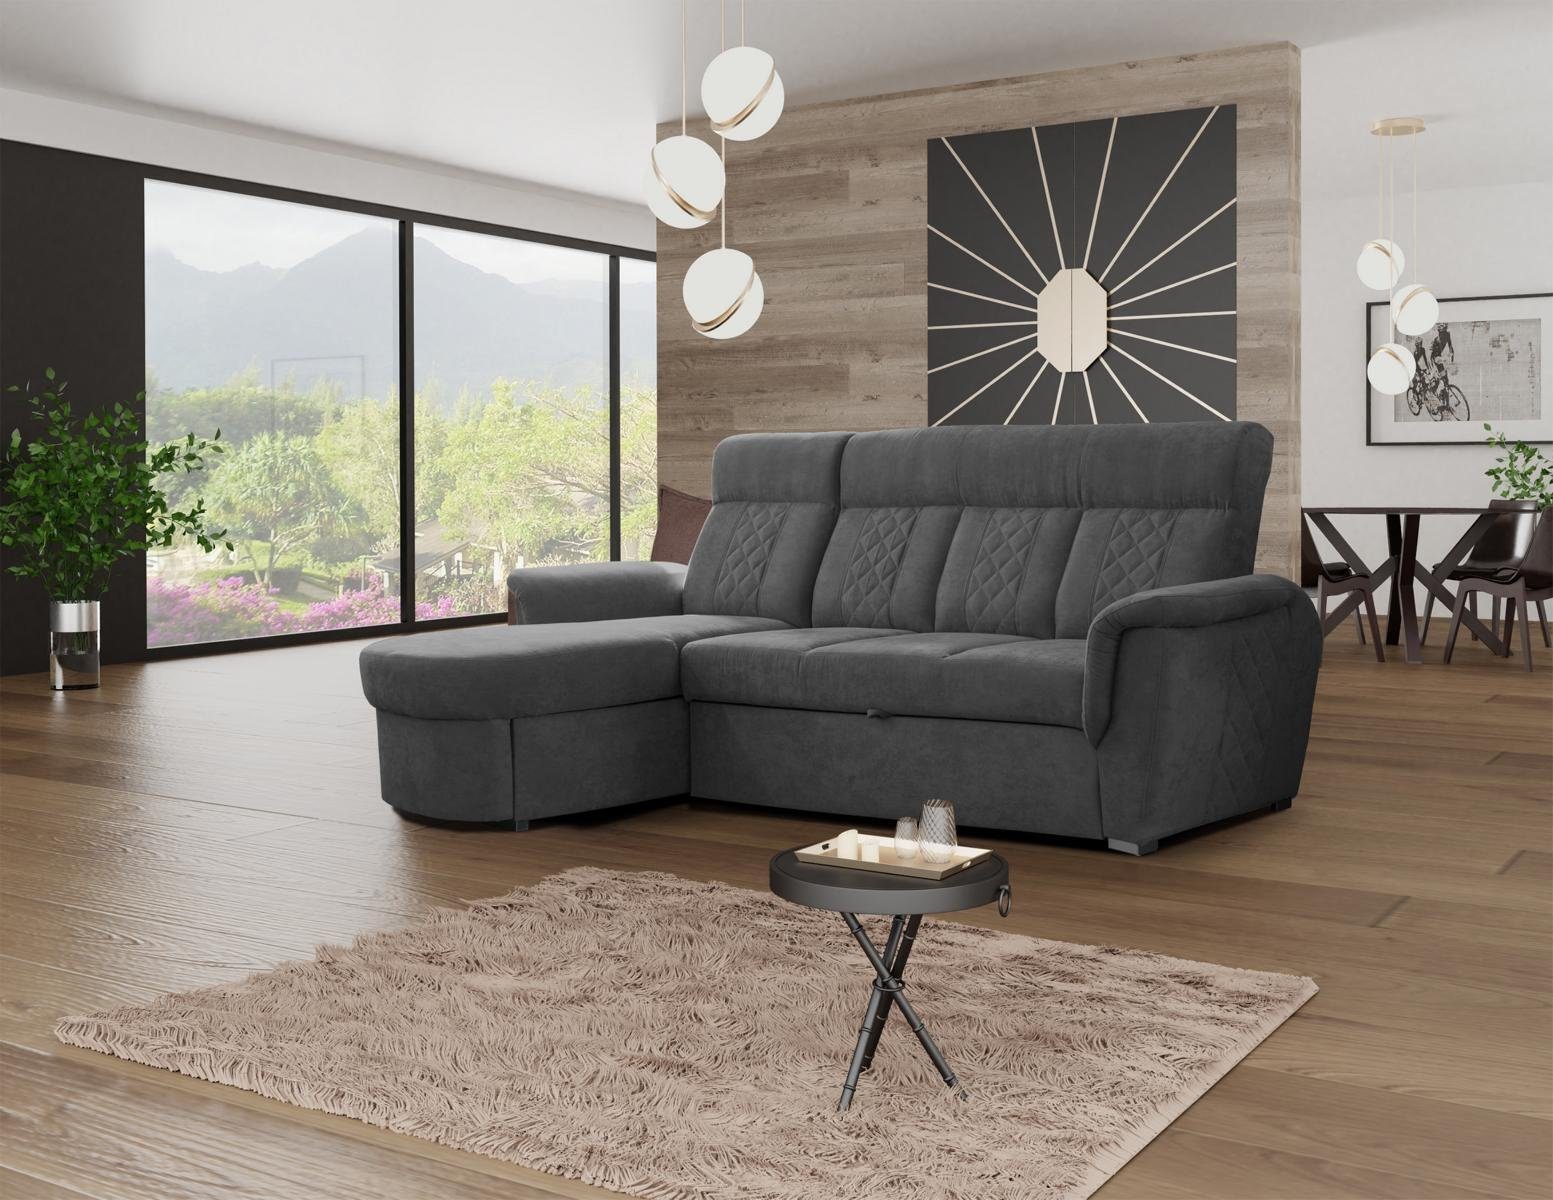 JVmoebel Ecksofa Ecksofa moderne exklusive hochwertige L-Form, Sofas Design Grau Mit Sofas Bettfunktion